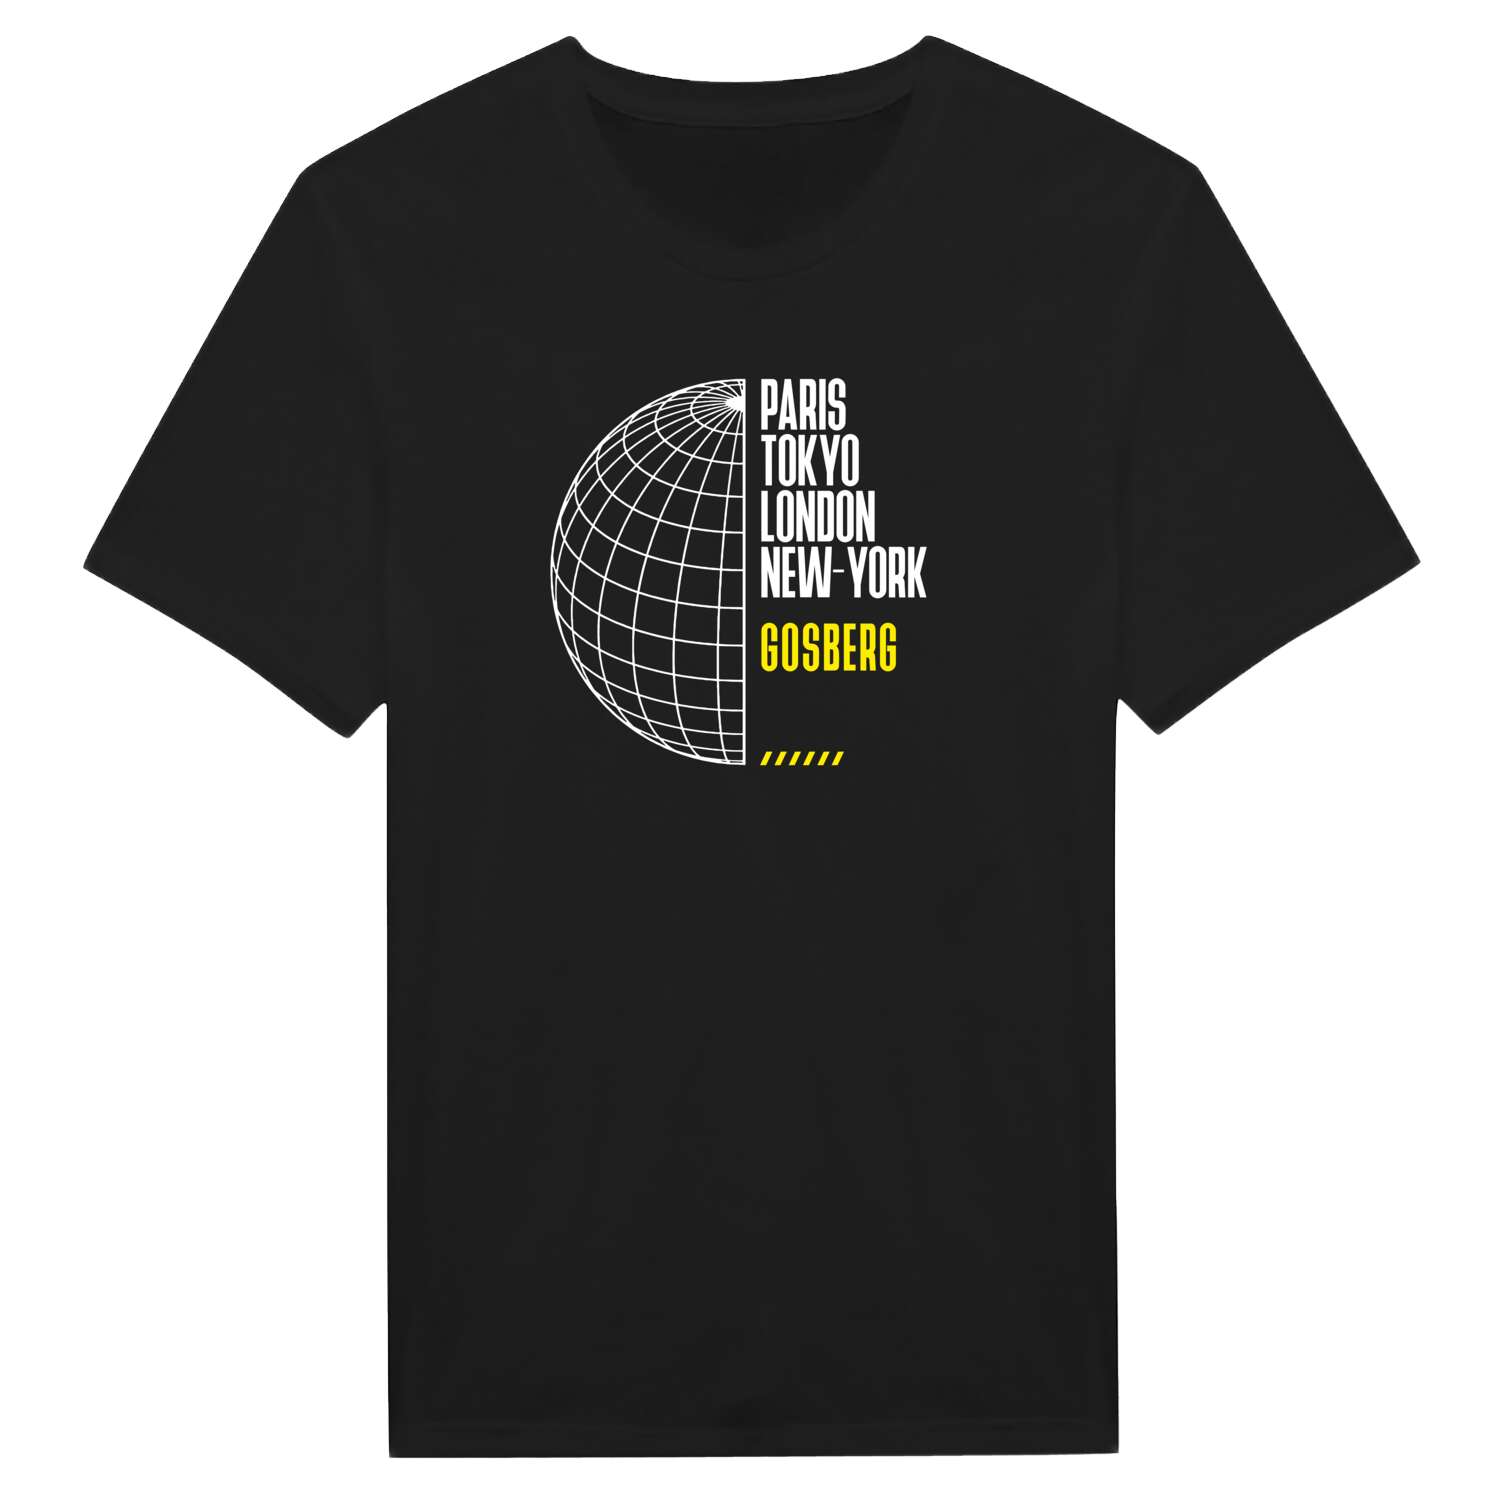 Gosberg T-Shirt »Paris Tokyo London«